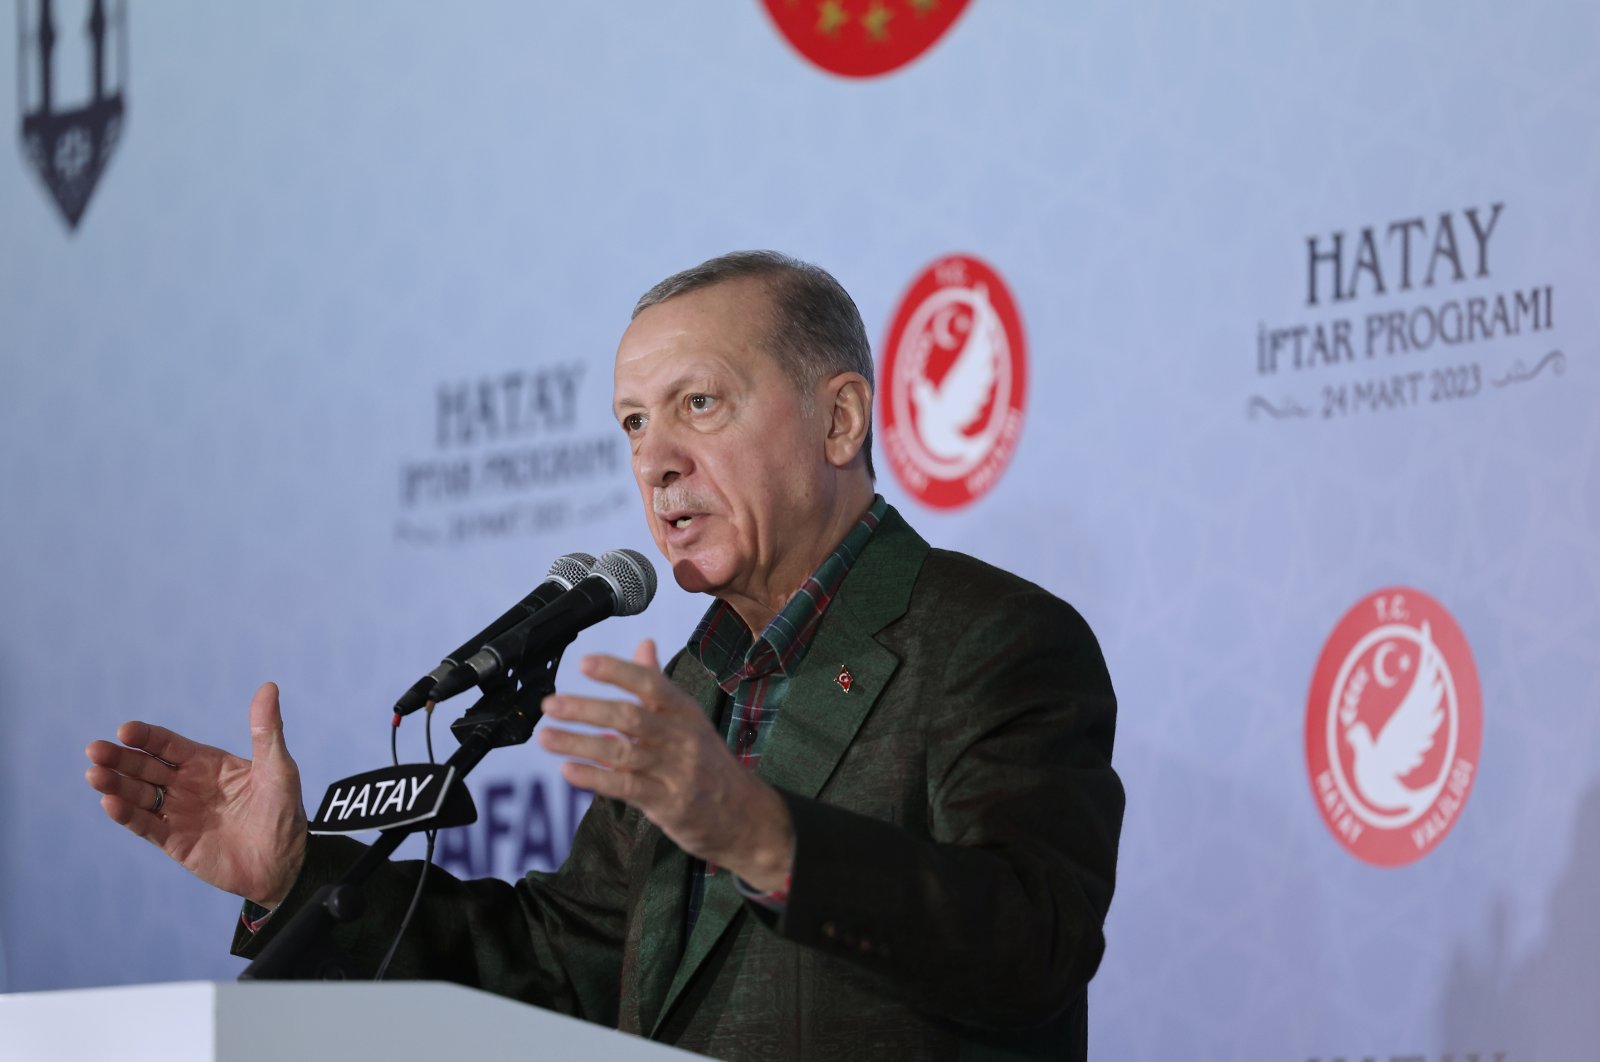 President Recep Tayyip Erdoğan attends an iftar program in Hatay, Türkiye, March 25, 2023. (AA Photo)